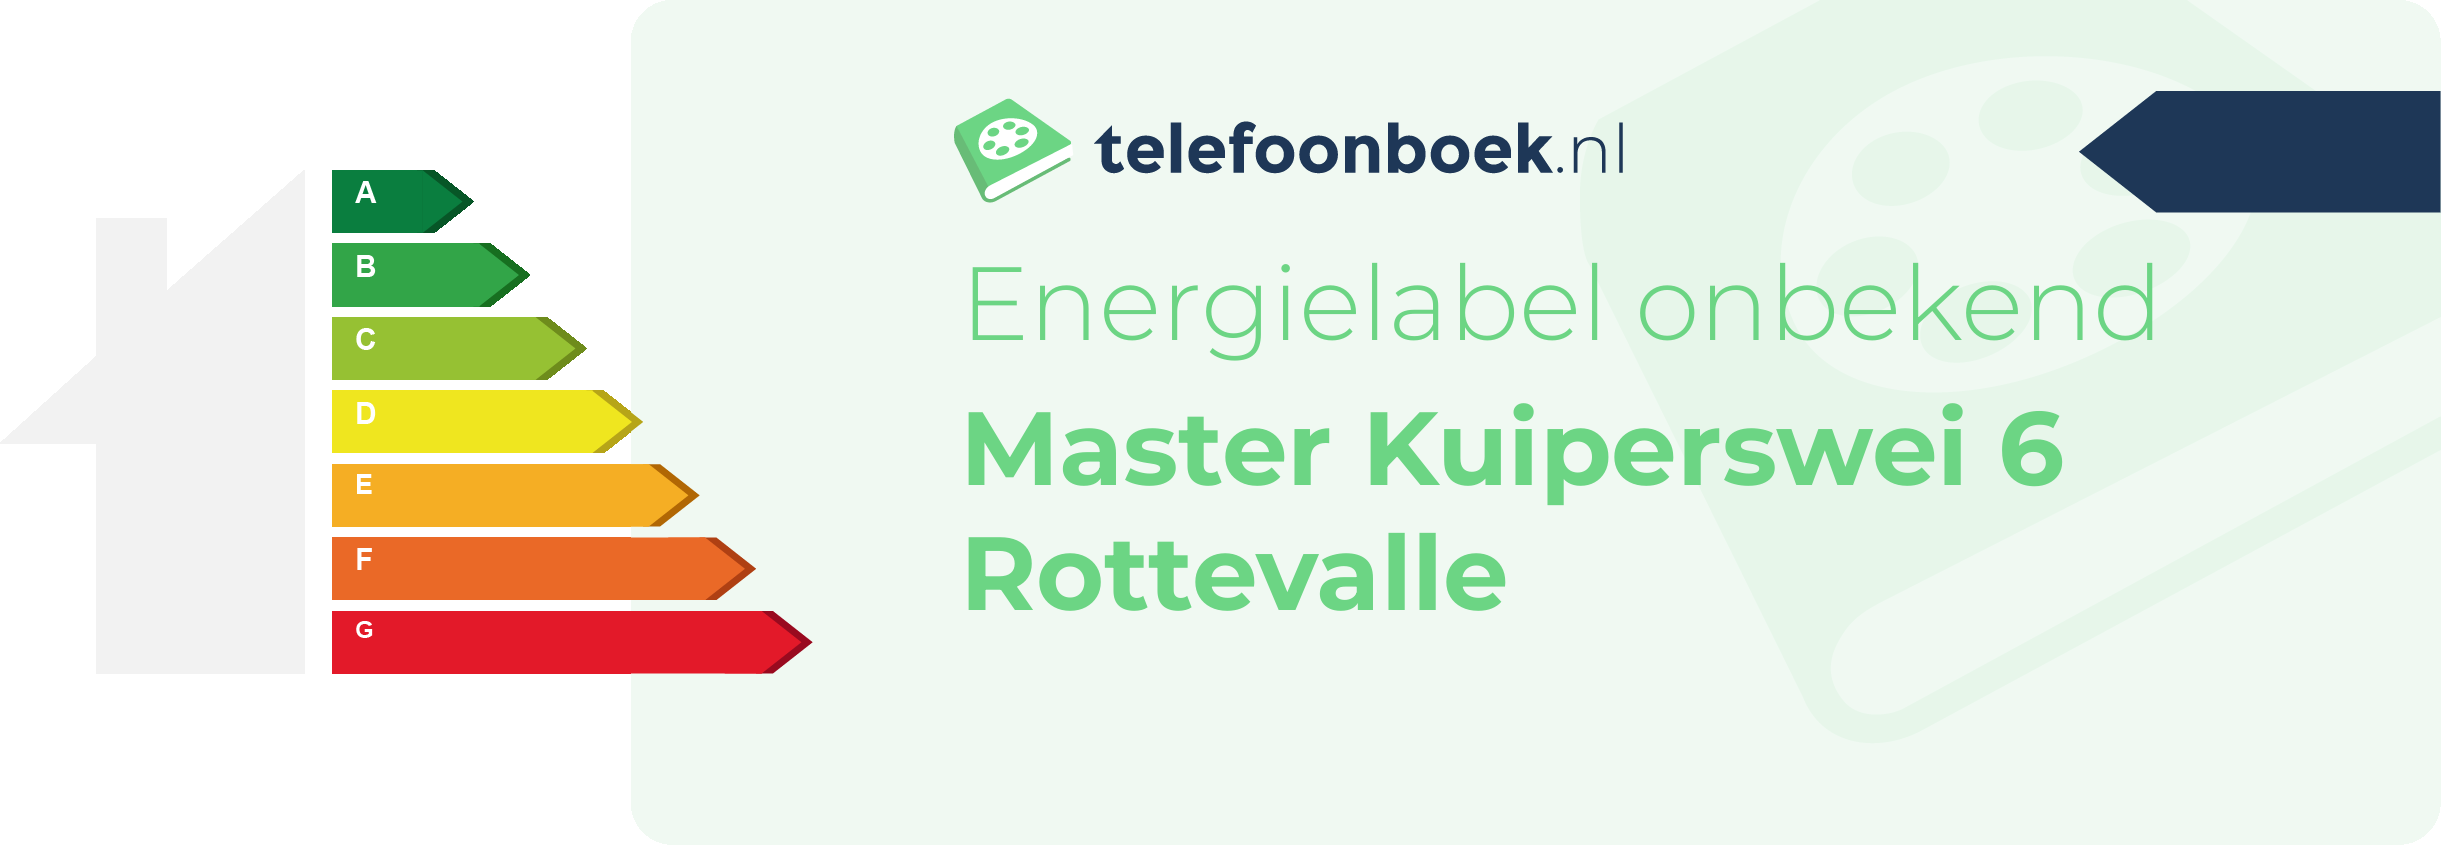 Energielabel Master Kuiperswei 6 Rottevalle